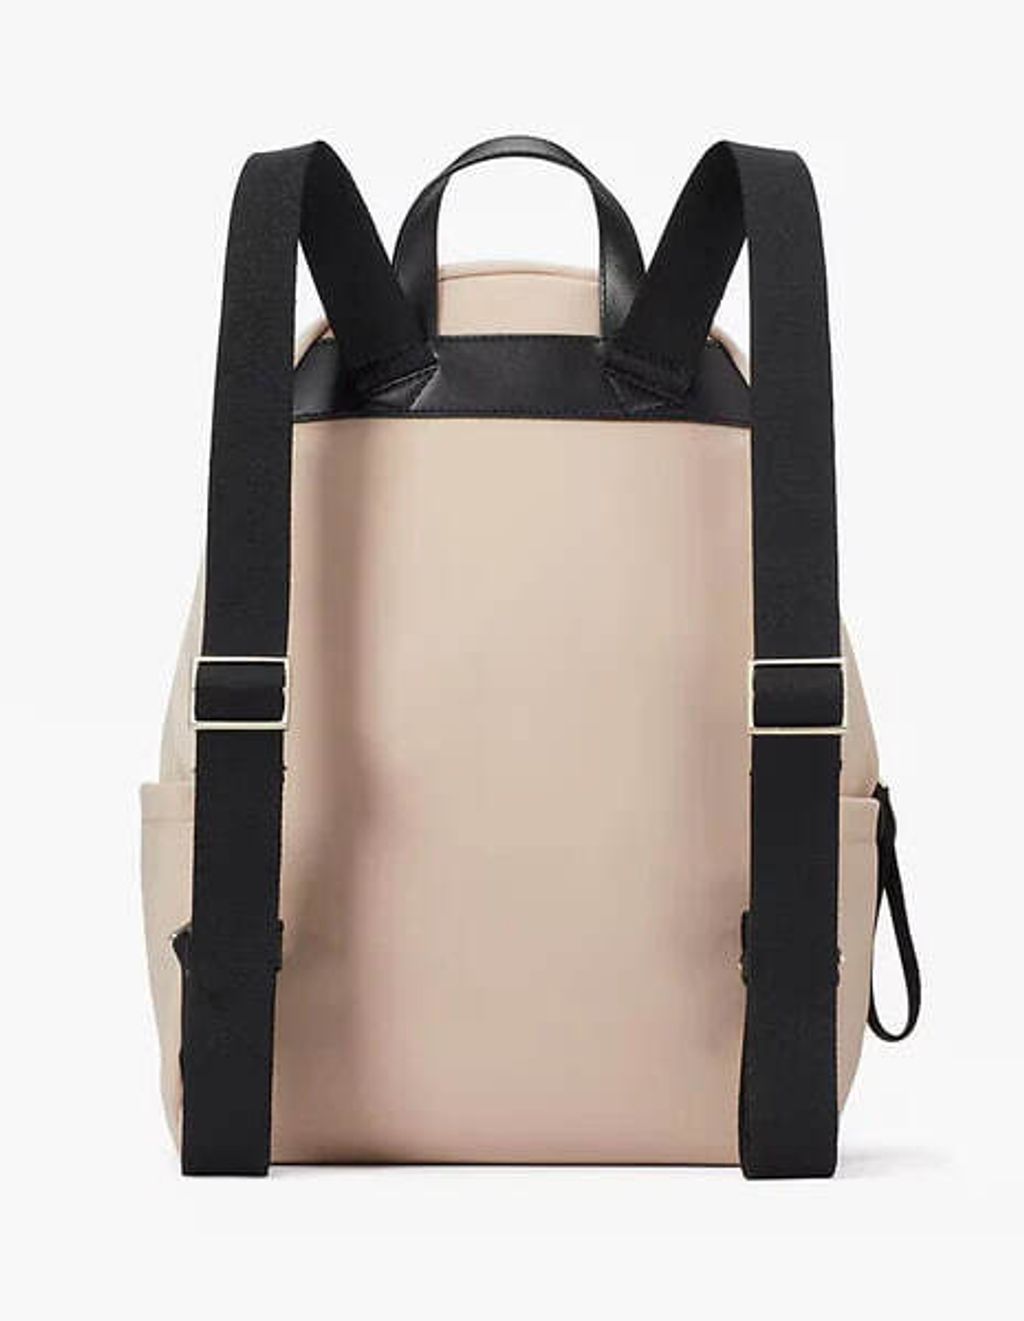 handbagbranded.com getlush outlet personalshopper usa malaysia ready stock coach malaysia  KATE SPADE Chelsea Medium Backpack 4